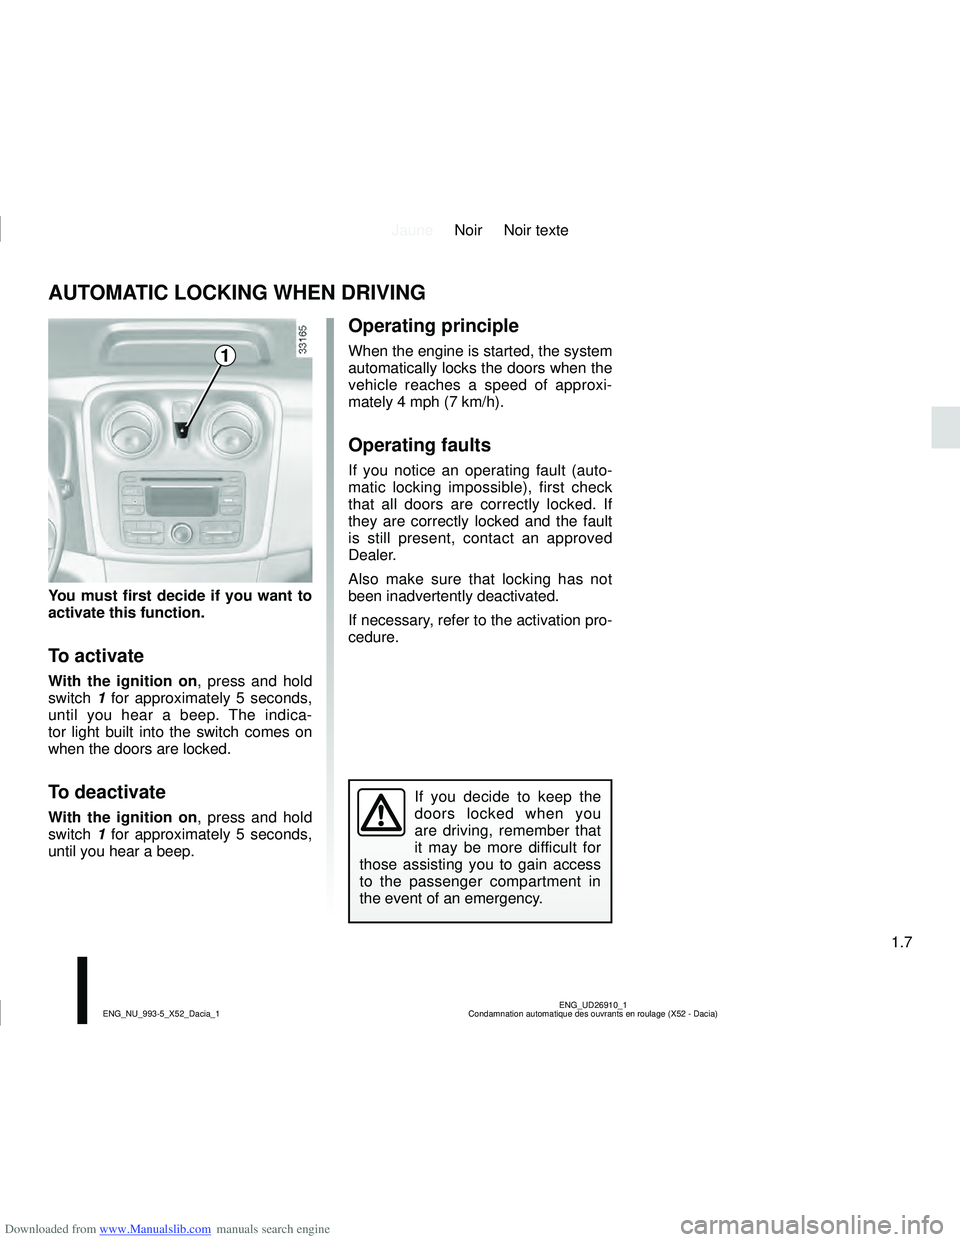 DACIA LOGAN 2016  Owners Manual Downloaded from www.Manualslib.com manuals search engine JauneNoir Noir texte
1.7
ENG_UD26910_1
Condamnation automatique des ouvrants en roulage (X52 - Dacia)
ENG_NU_993-5_X52_Dacia_1
AUTOMATIC LOCKIN